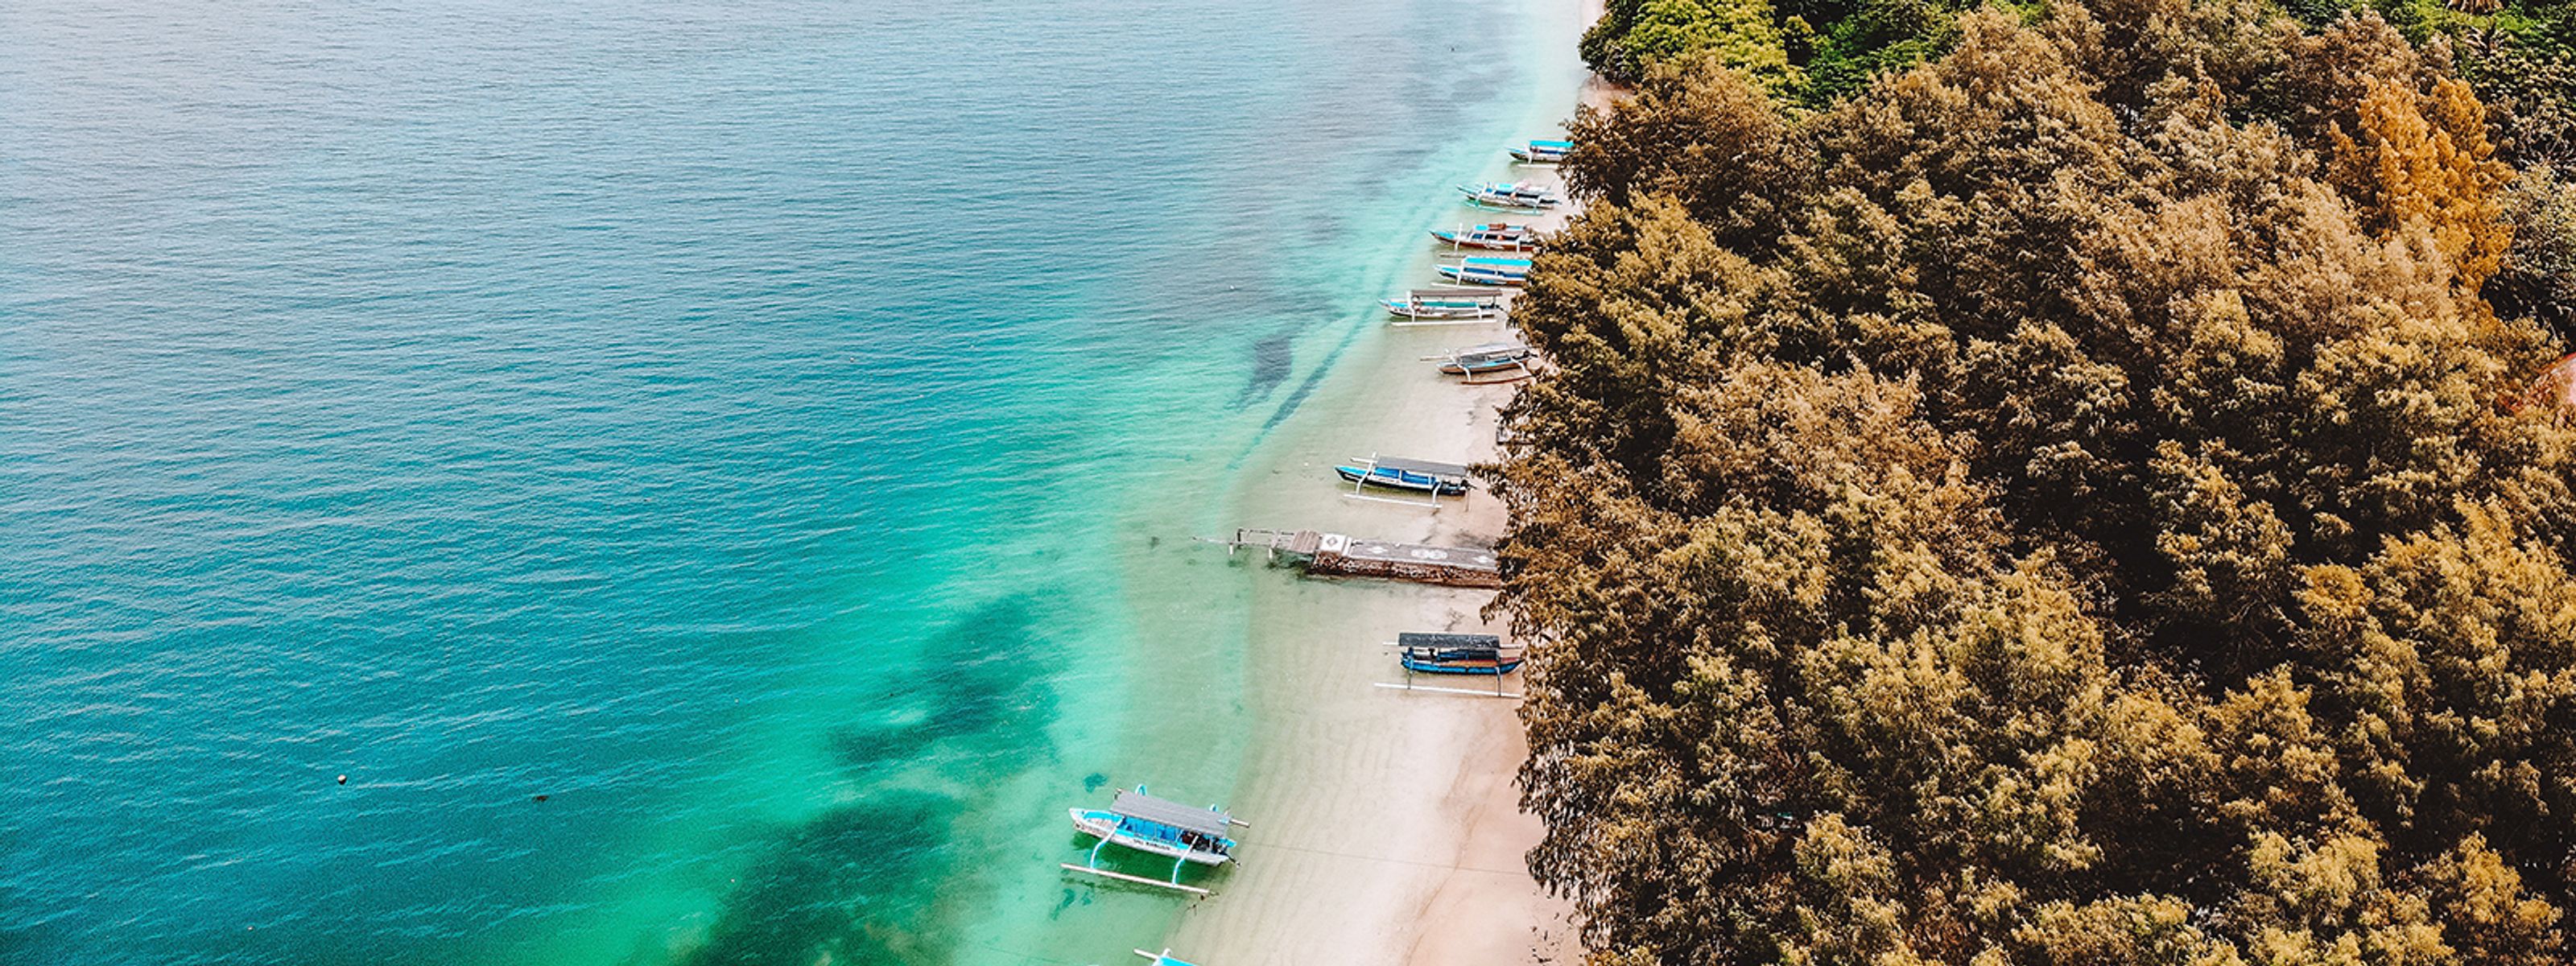 Strand auf Lombok